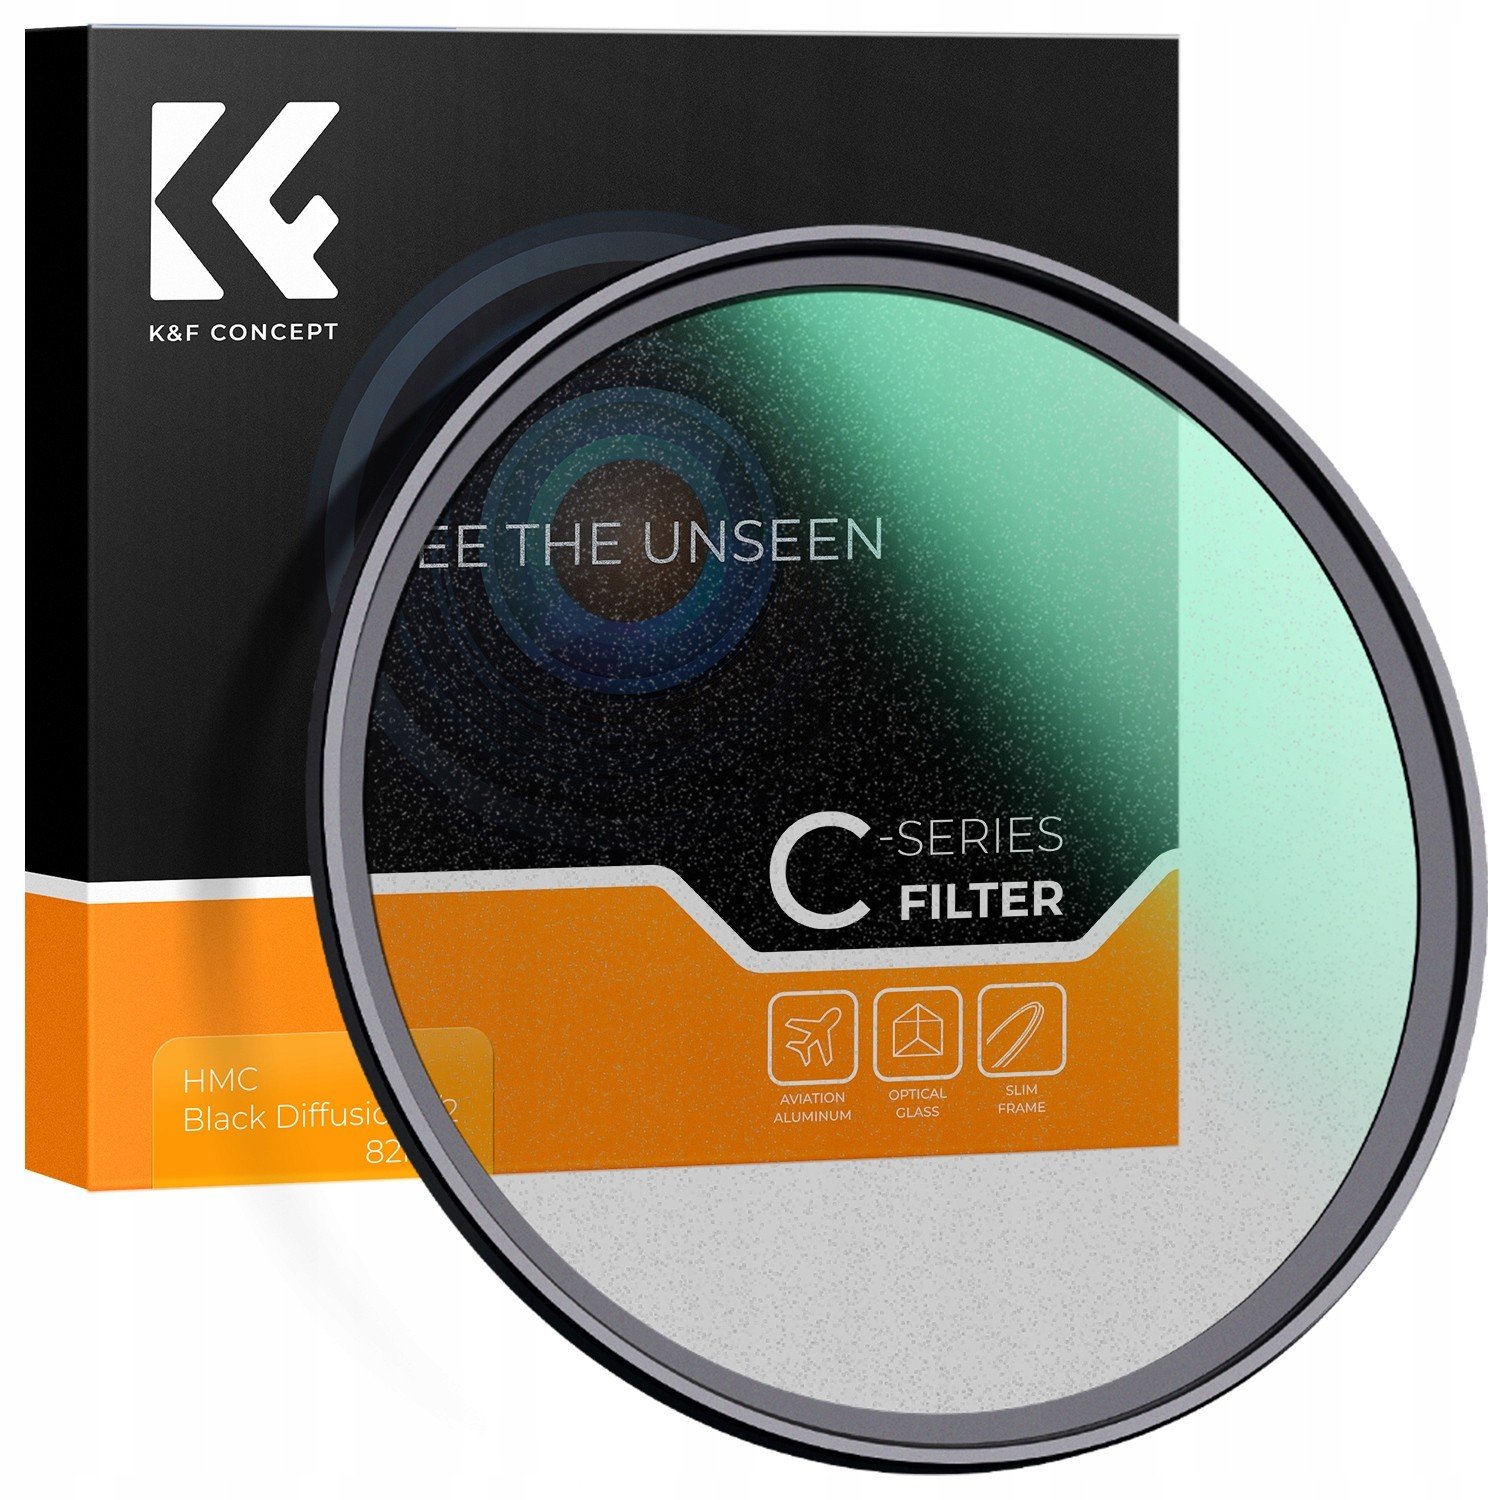 Difuzní filtr Black Mist 1/2 52mm Nano-C K&f